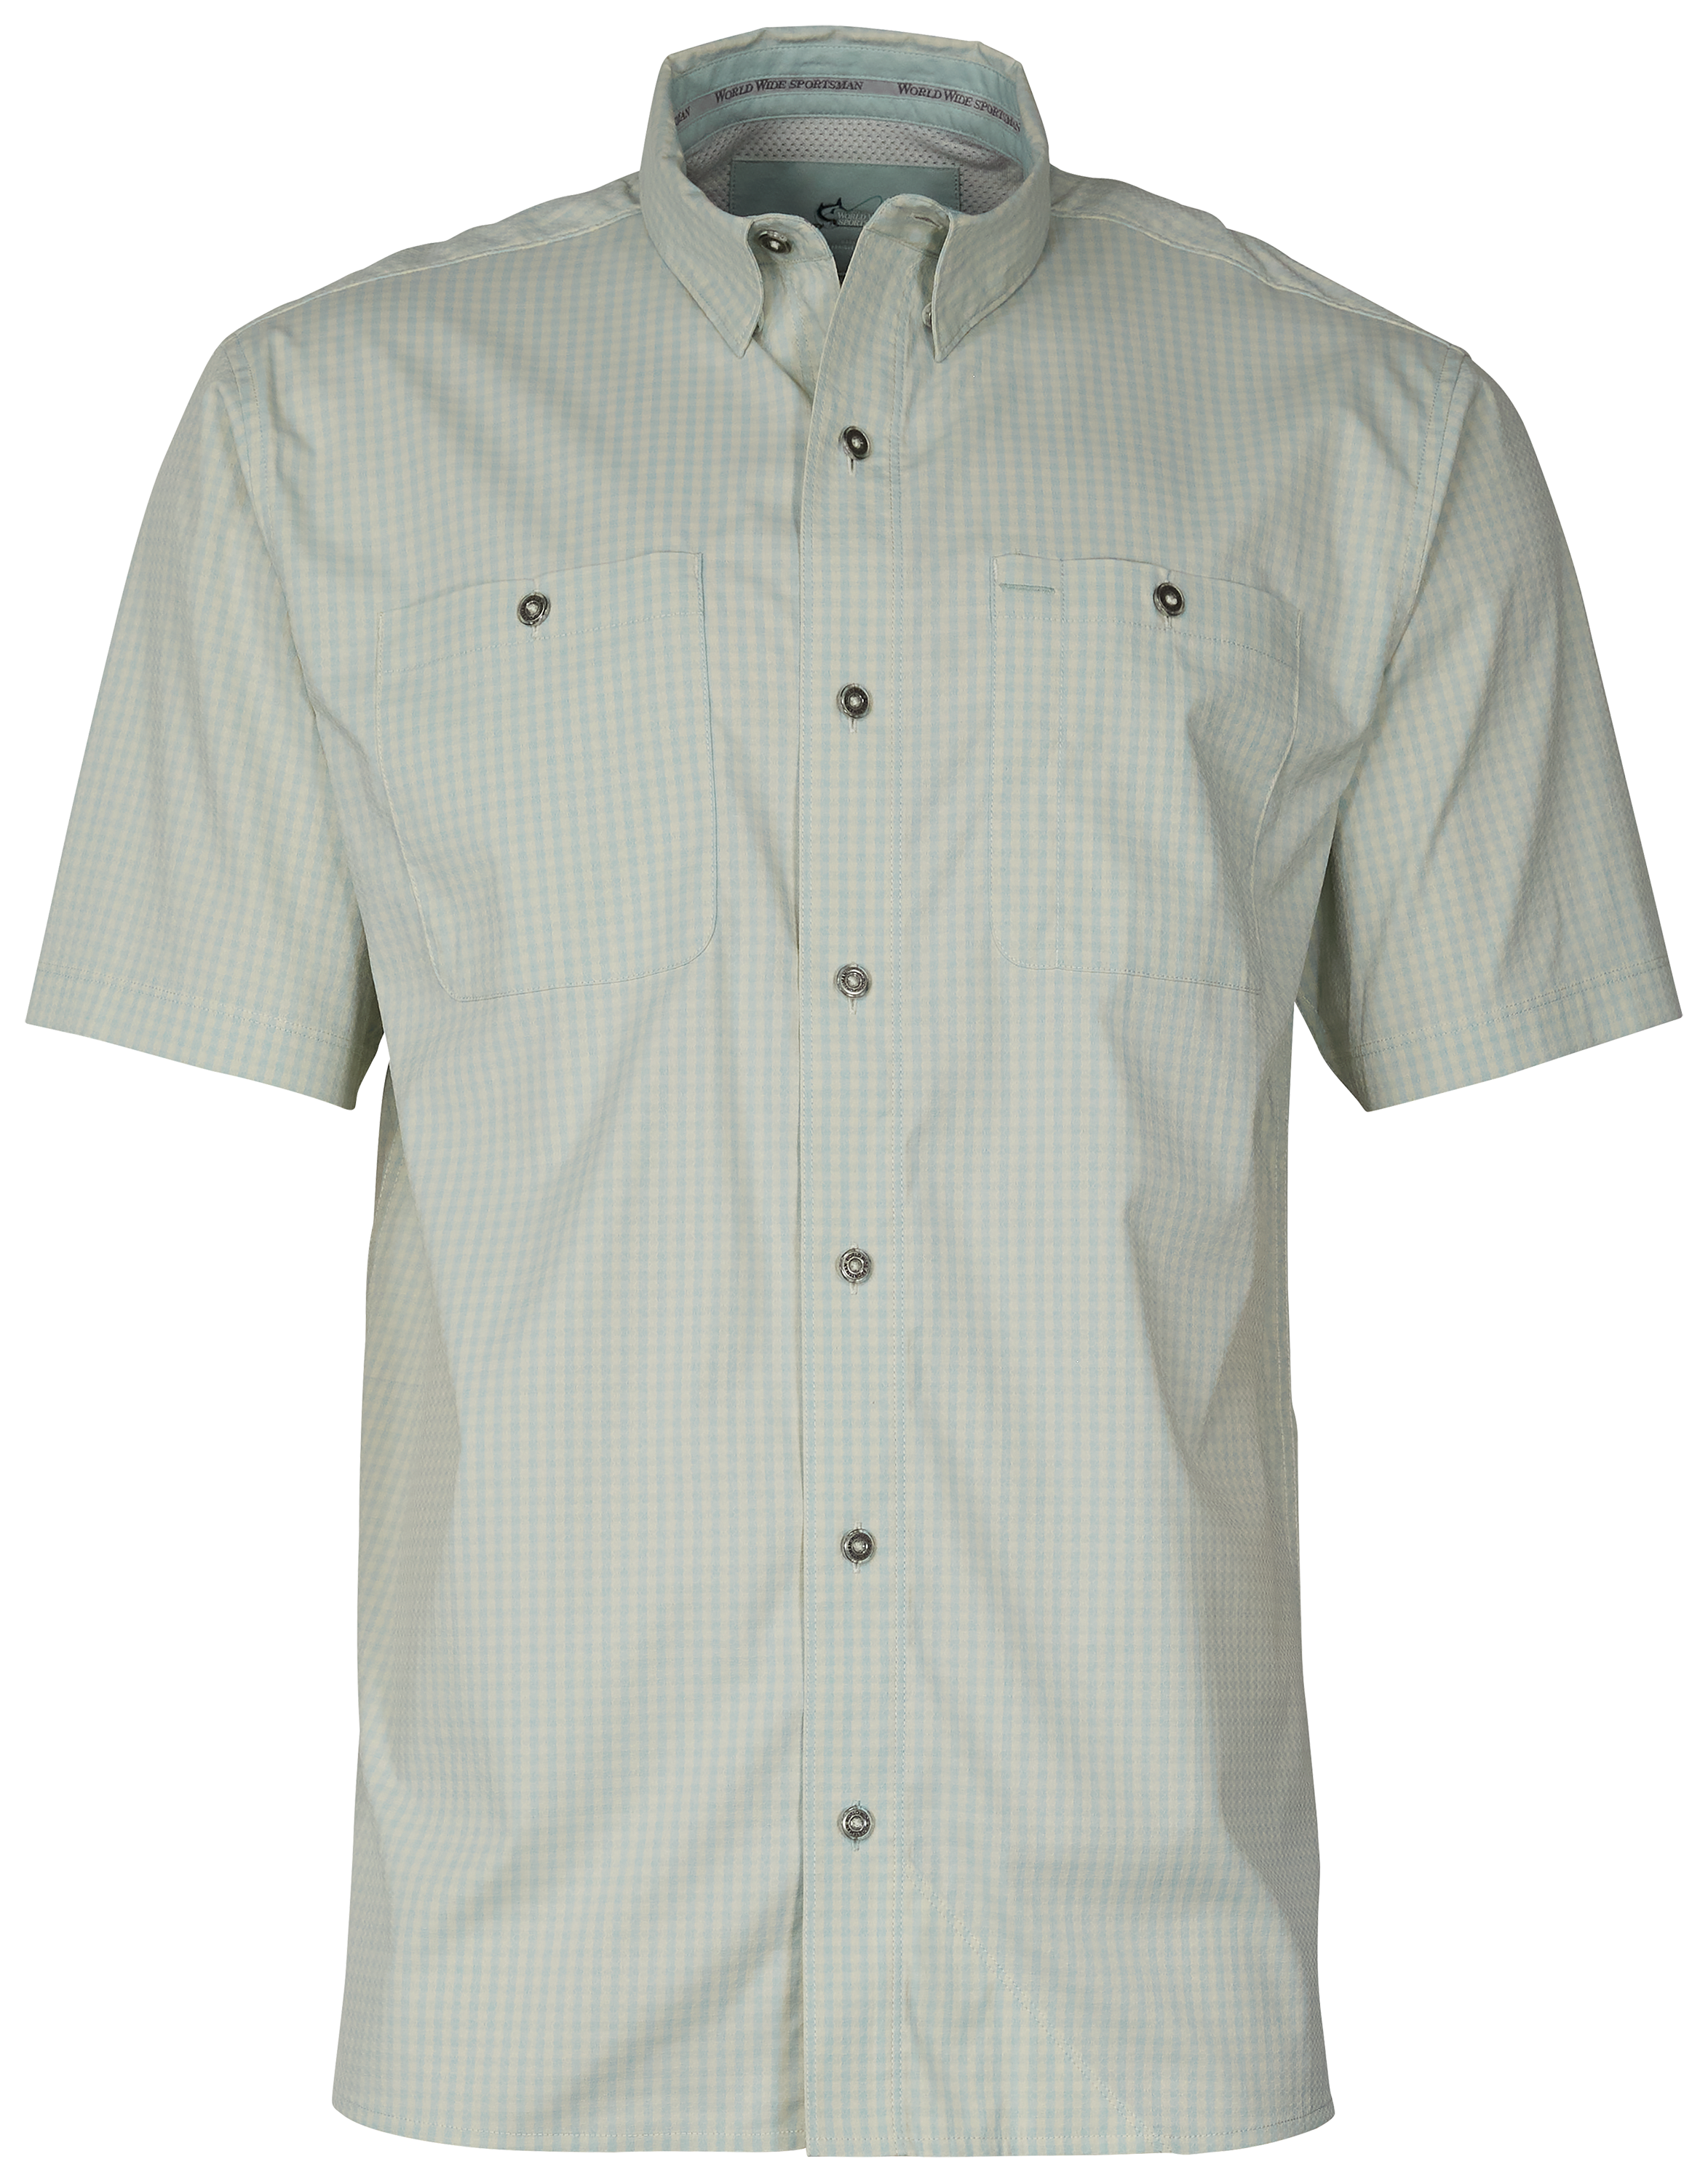 World Wide Sportsman Ultimate Angler Plaid Short-Sleeve Shirt for Men - Harbor Gray Gingham - XL